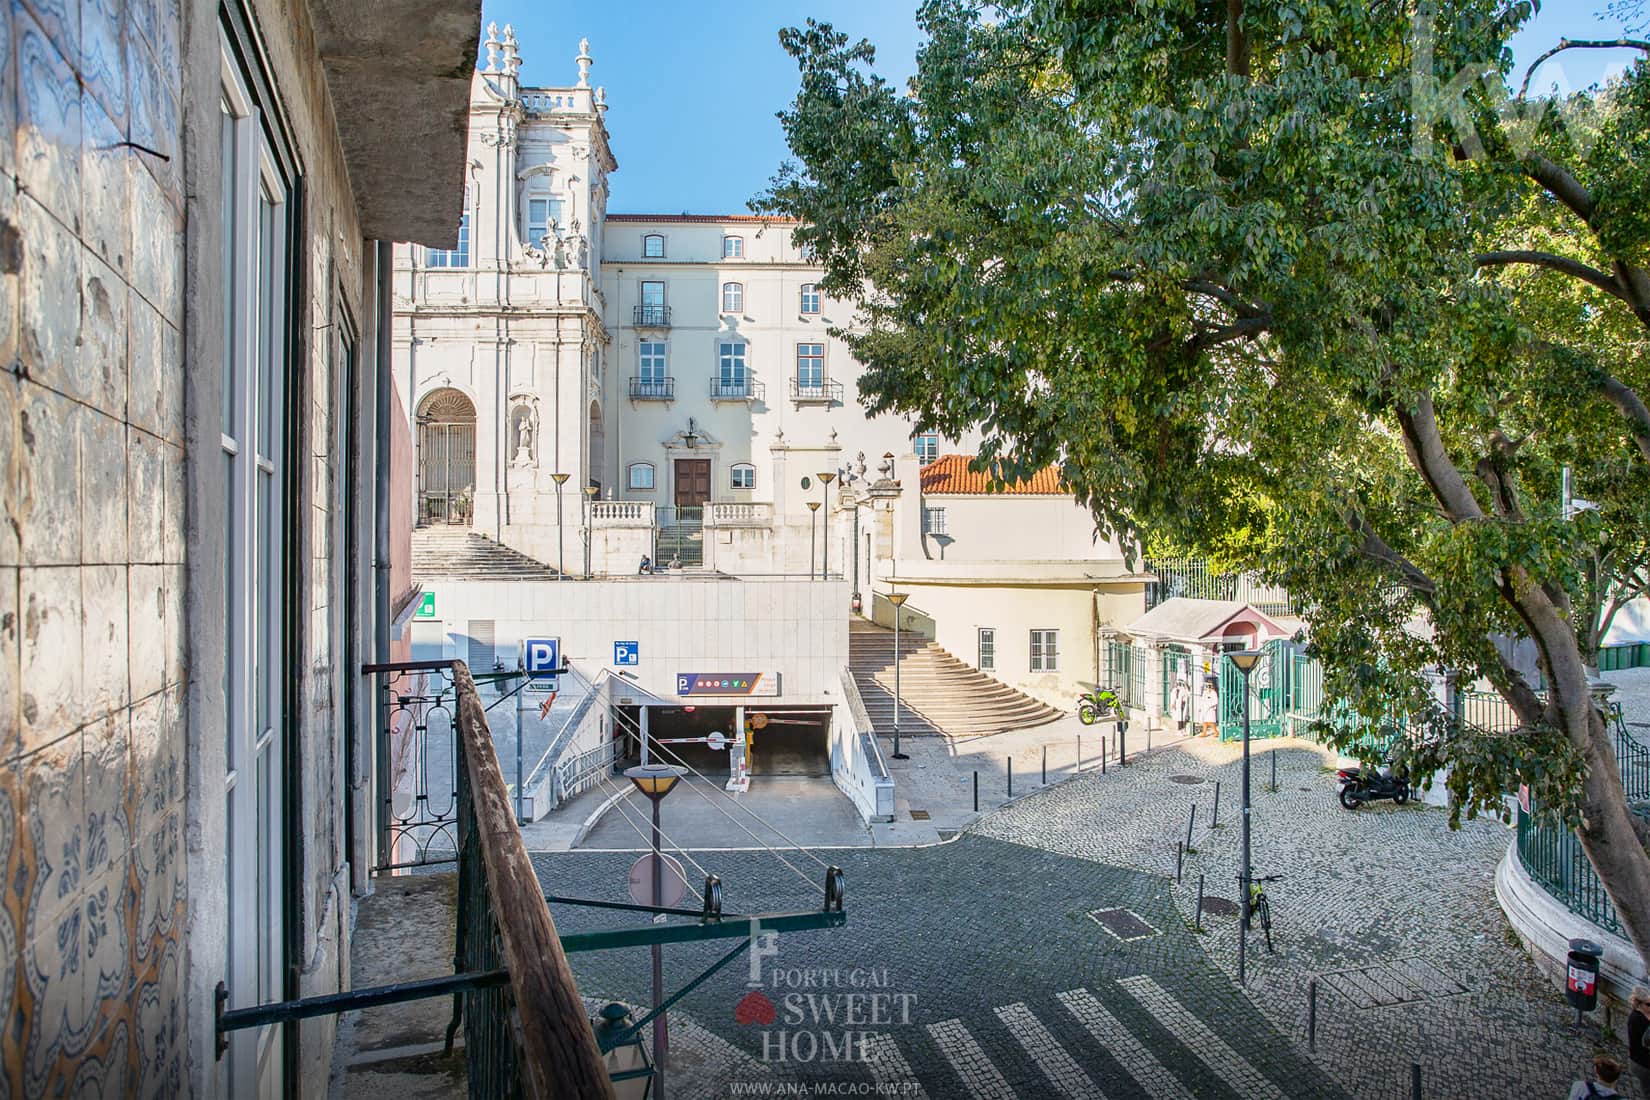 View from the balcony to the Church of Nossa Senhora das Mercês